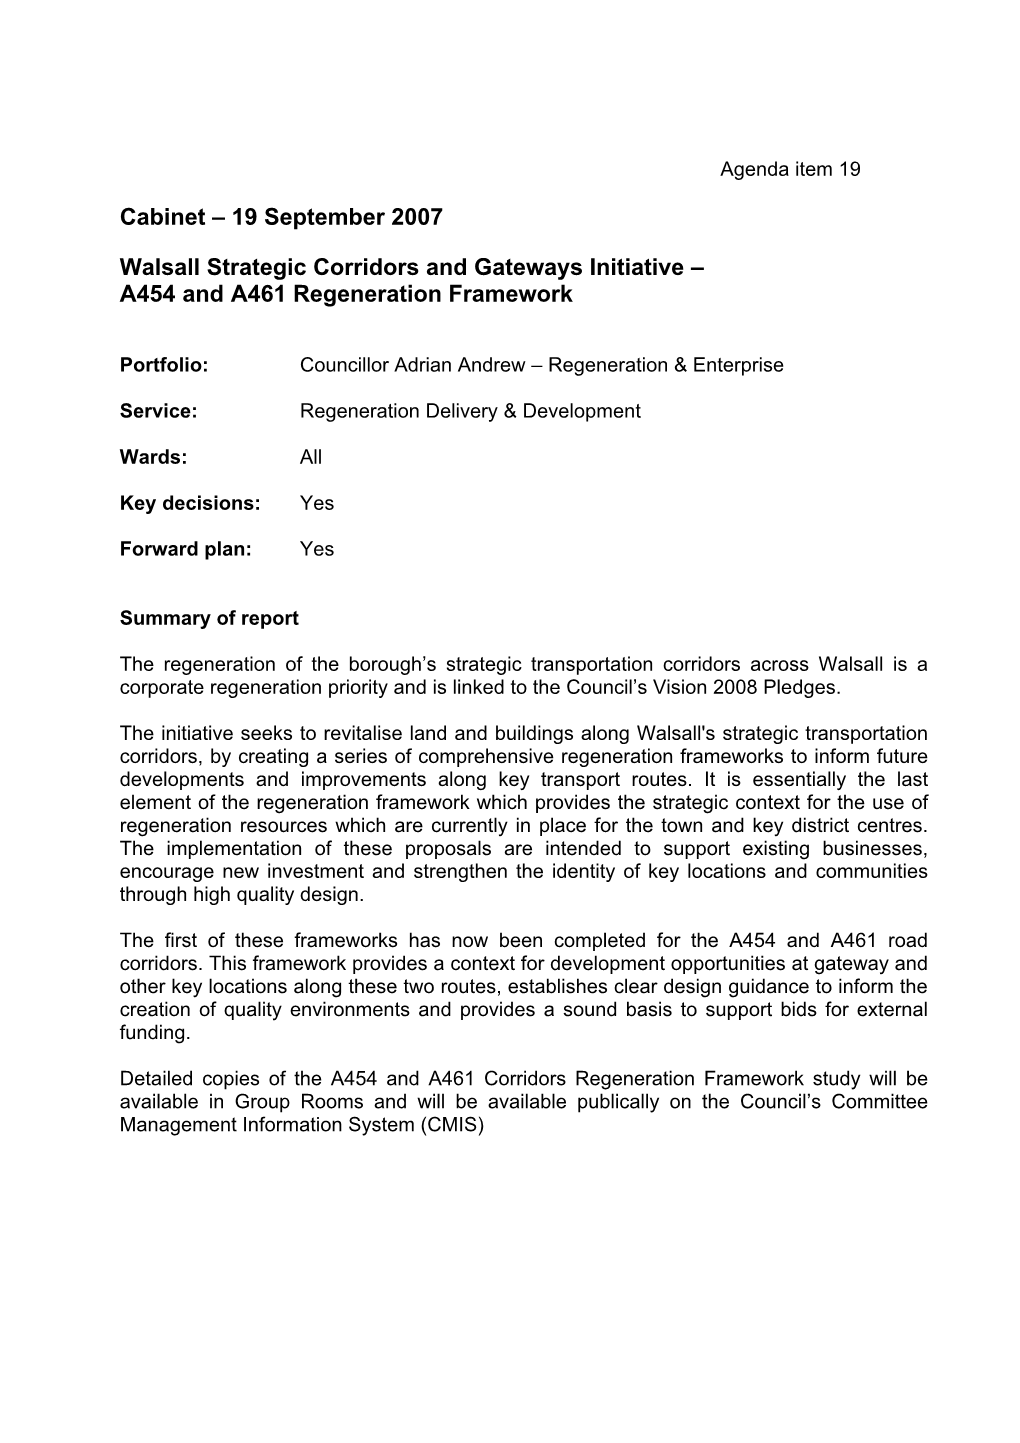 Cabinet – 19 September 2007 Walsall Strategic Corridors and Gateways Initiative – A454 and A461 Regeneration Framework